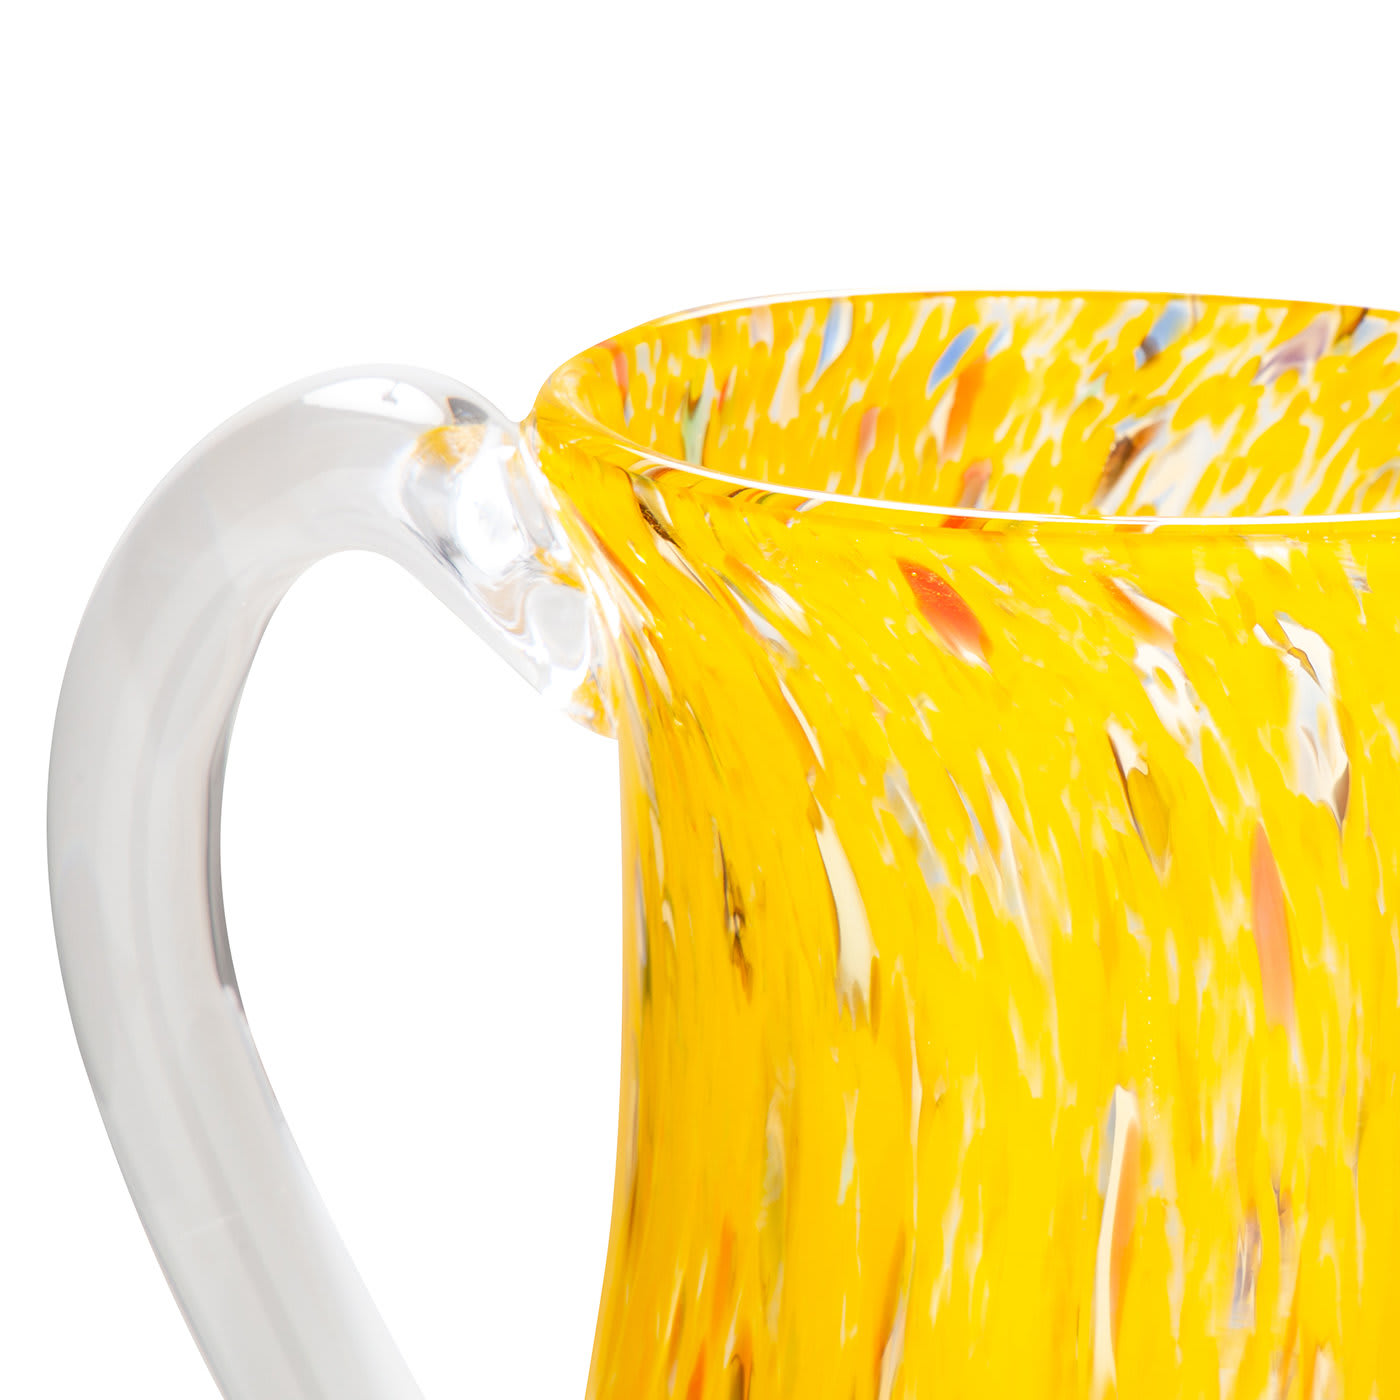 GO.TO Yellow Water Pitcher - Wave Murano Glass by Roberto Beltrami